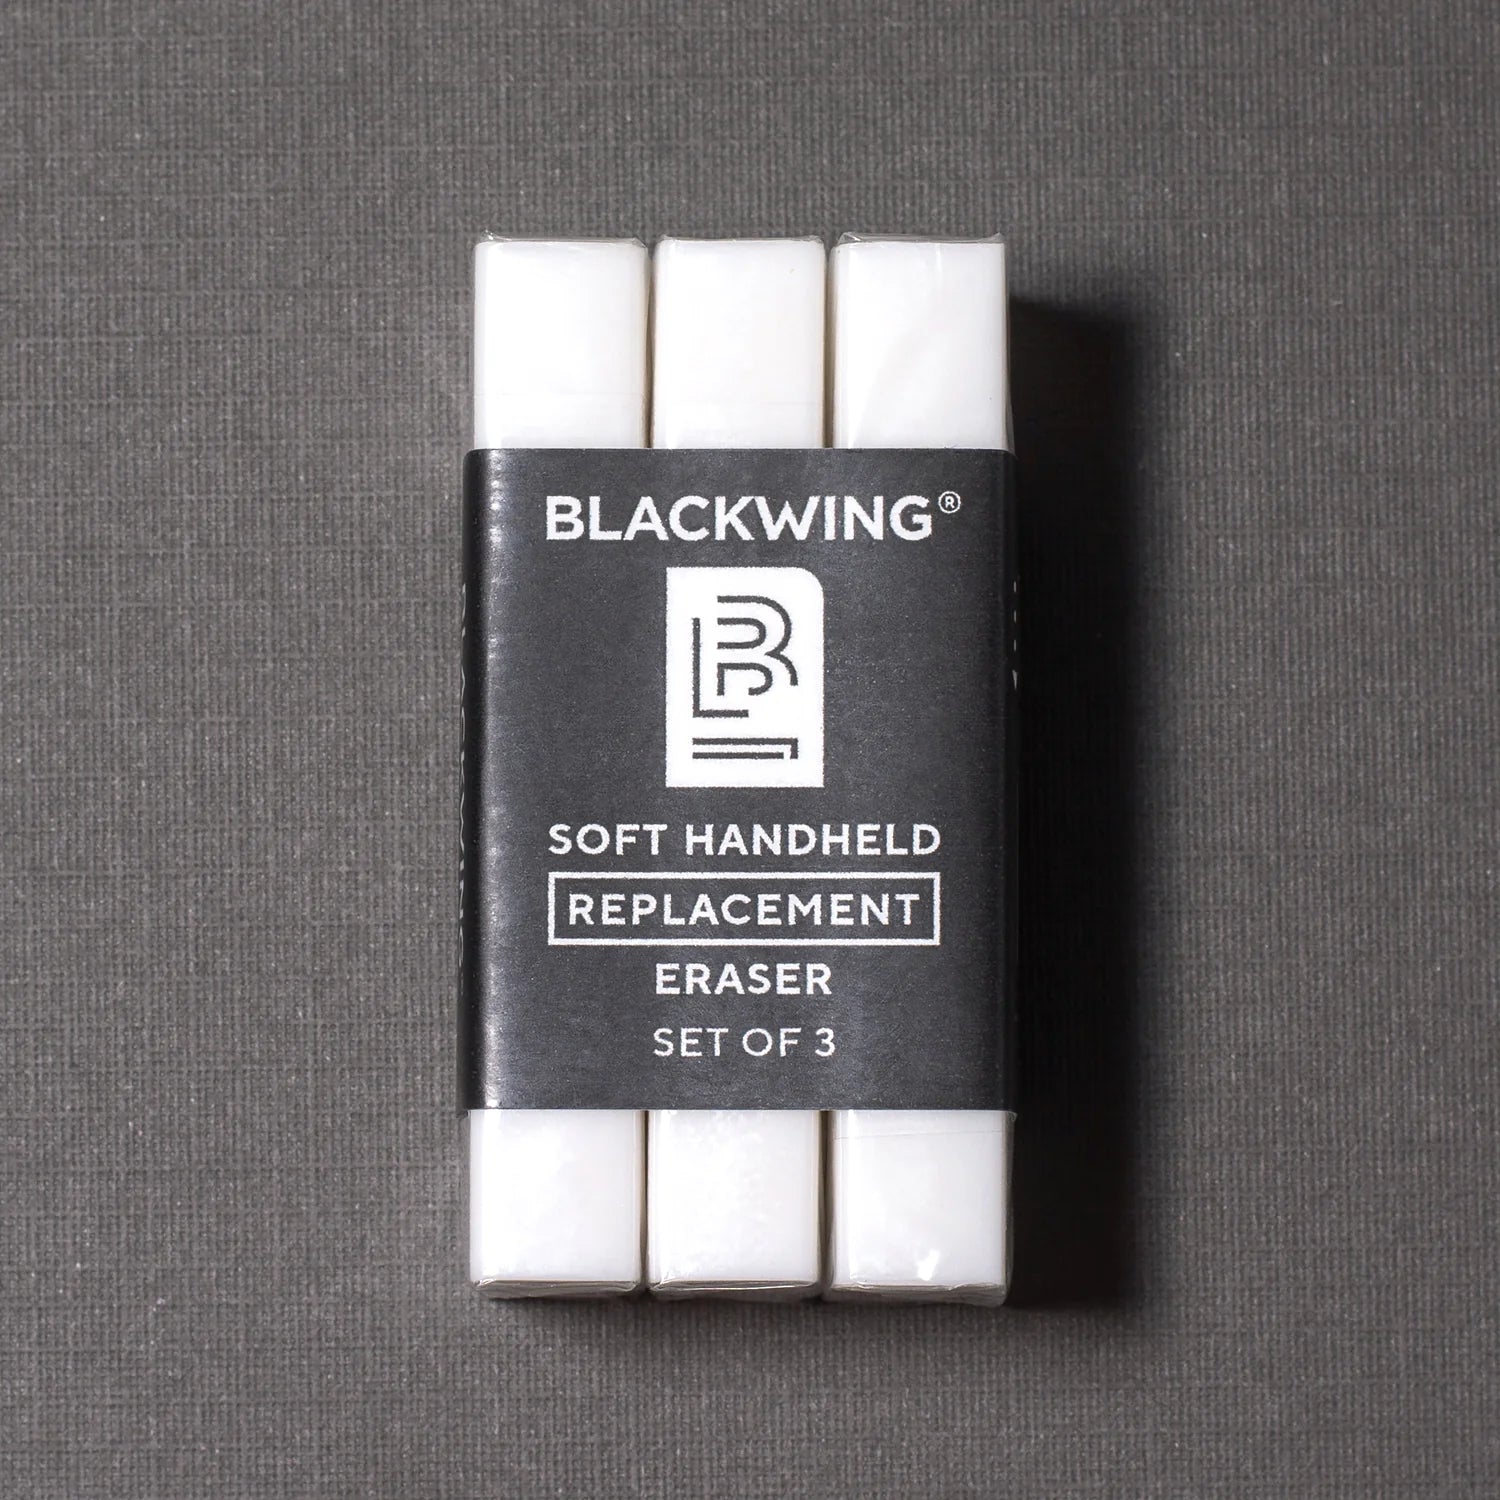 Blackwing Soft Handheld Eraser Replacements